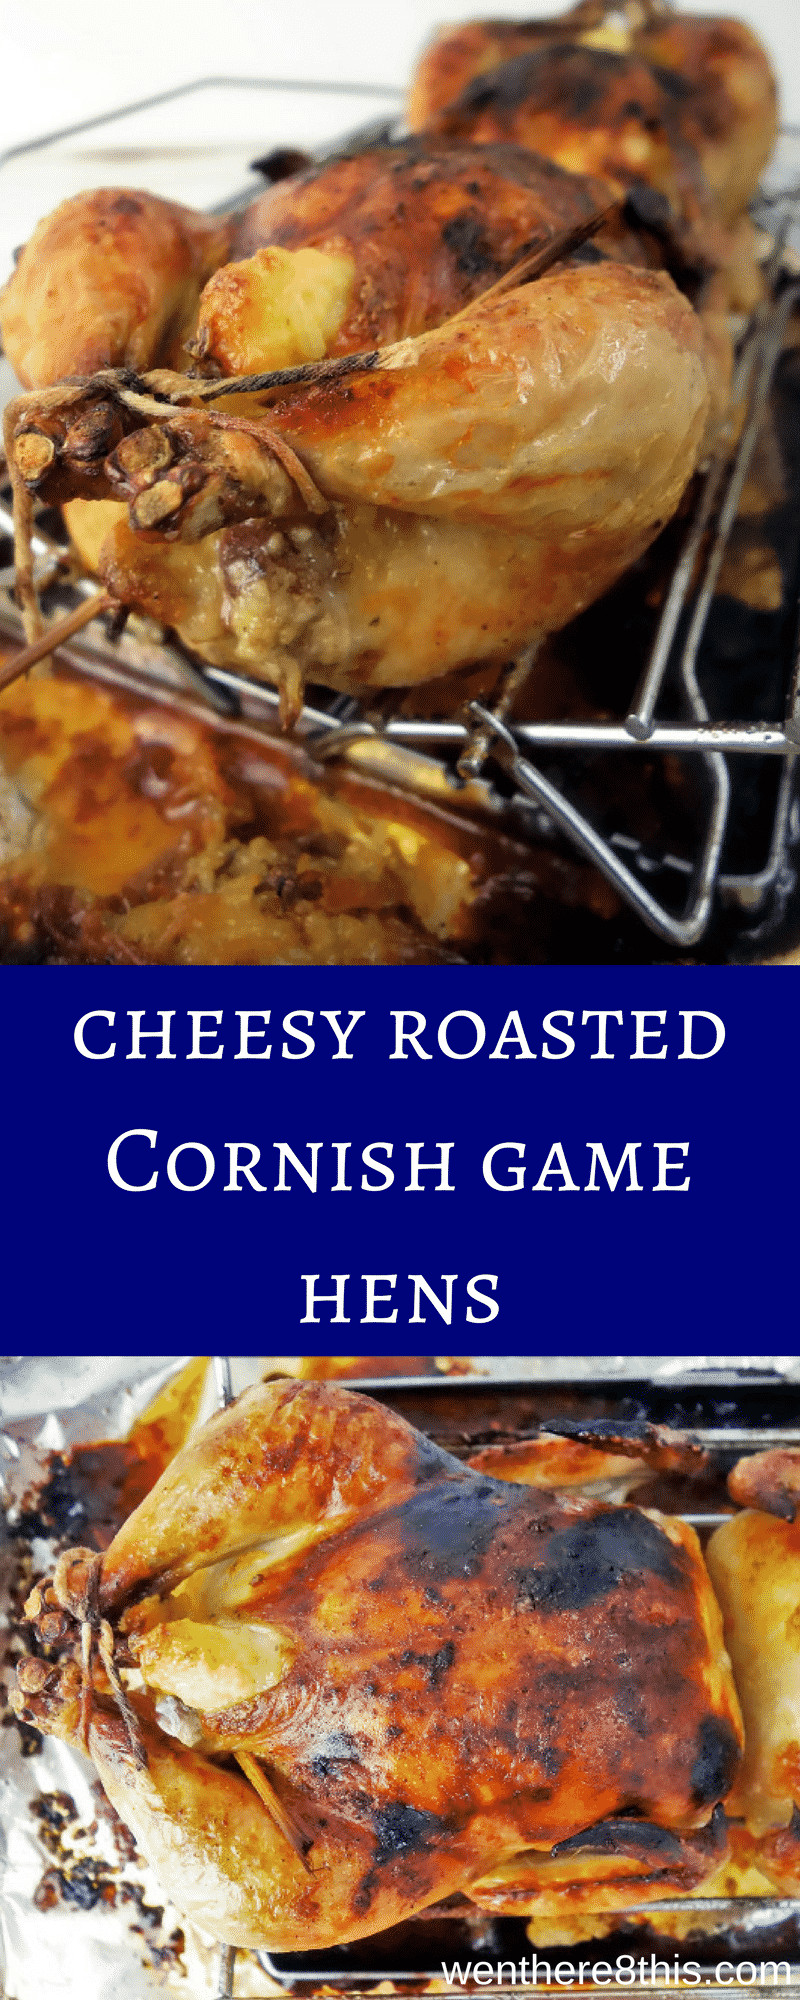 Easy Cornish Game Hens Recipe
 Cheesy Roasted Cornish Game Hens Went Here 8 This